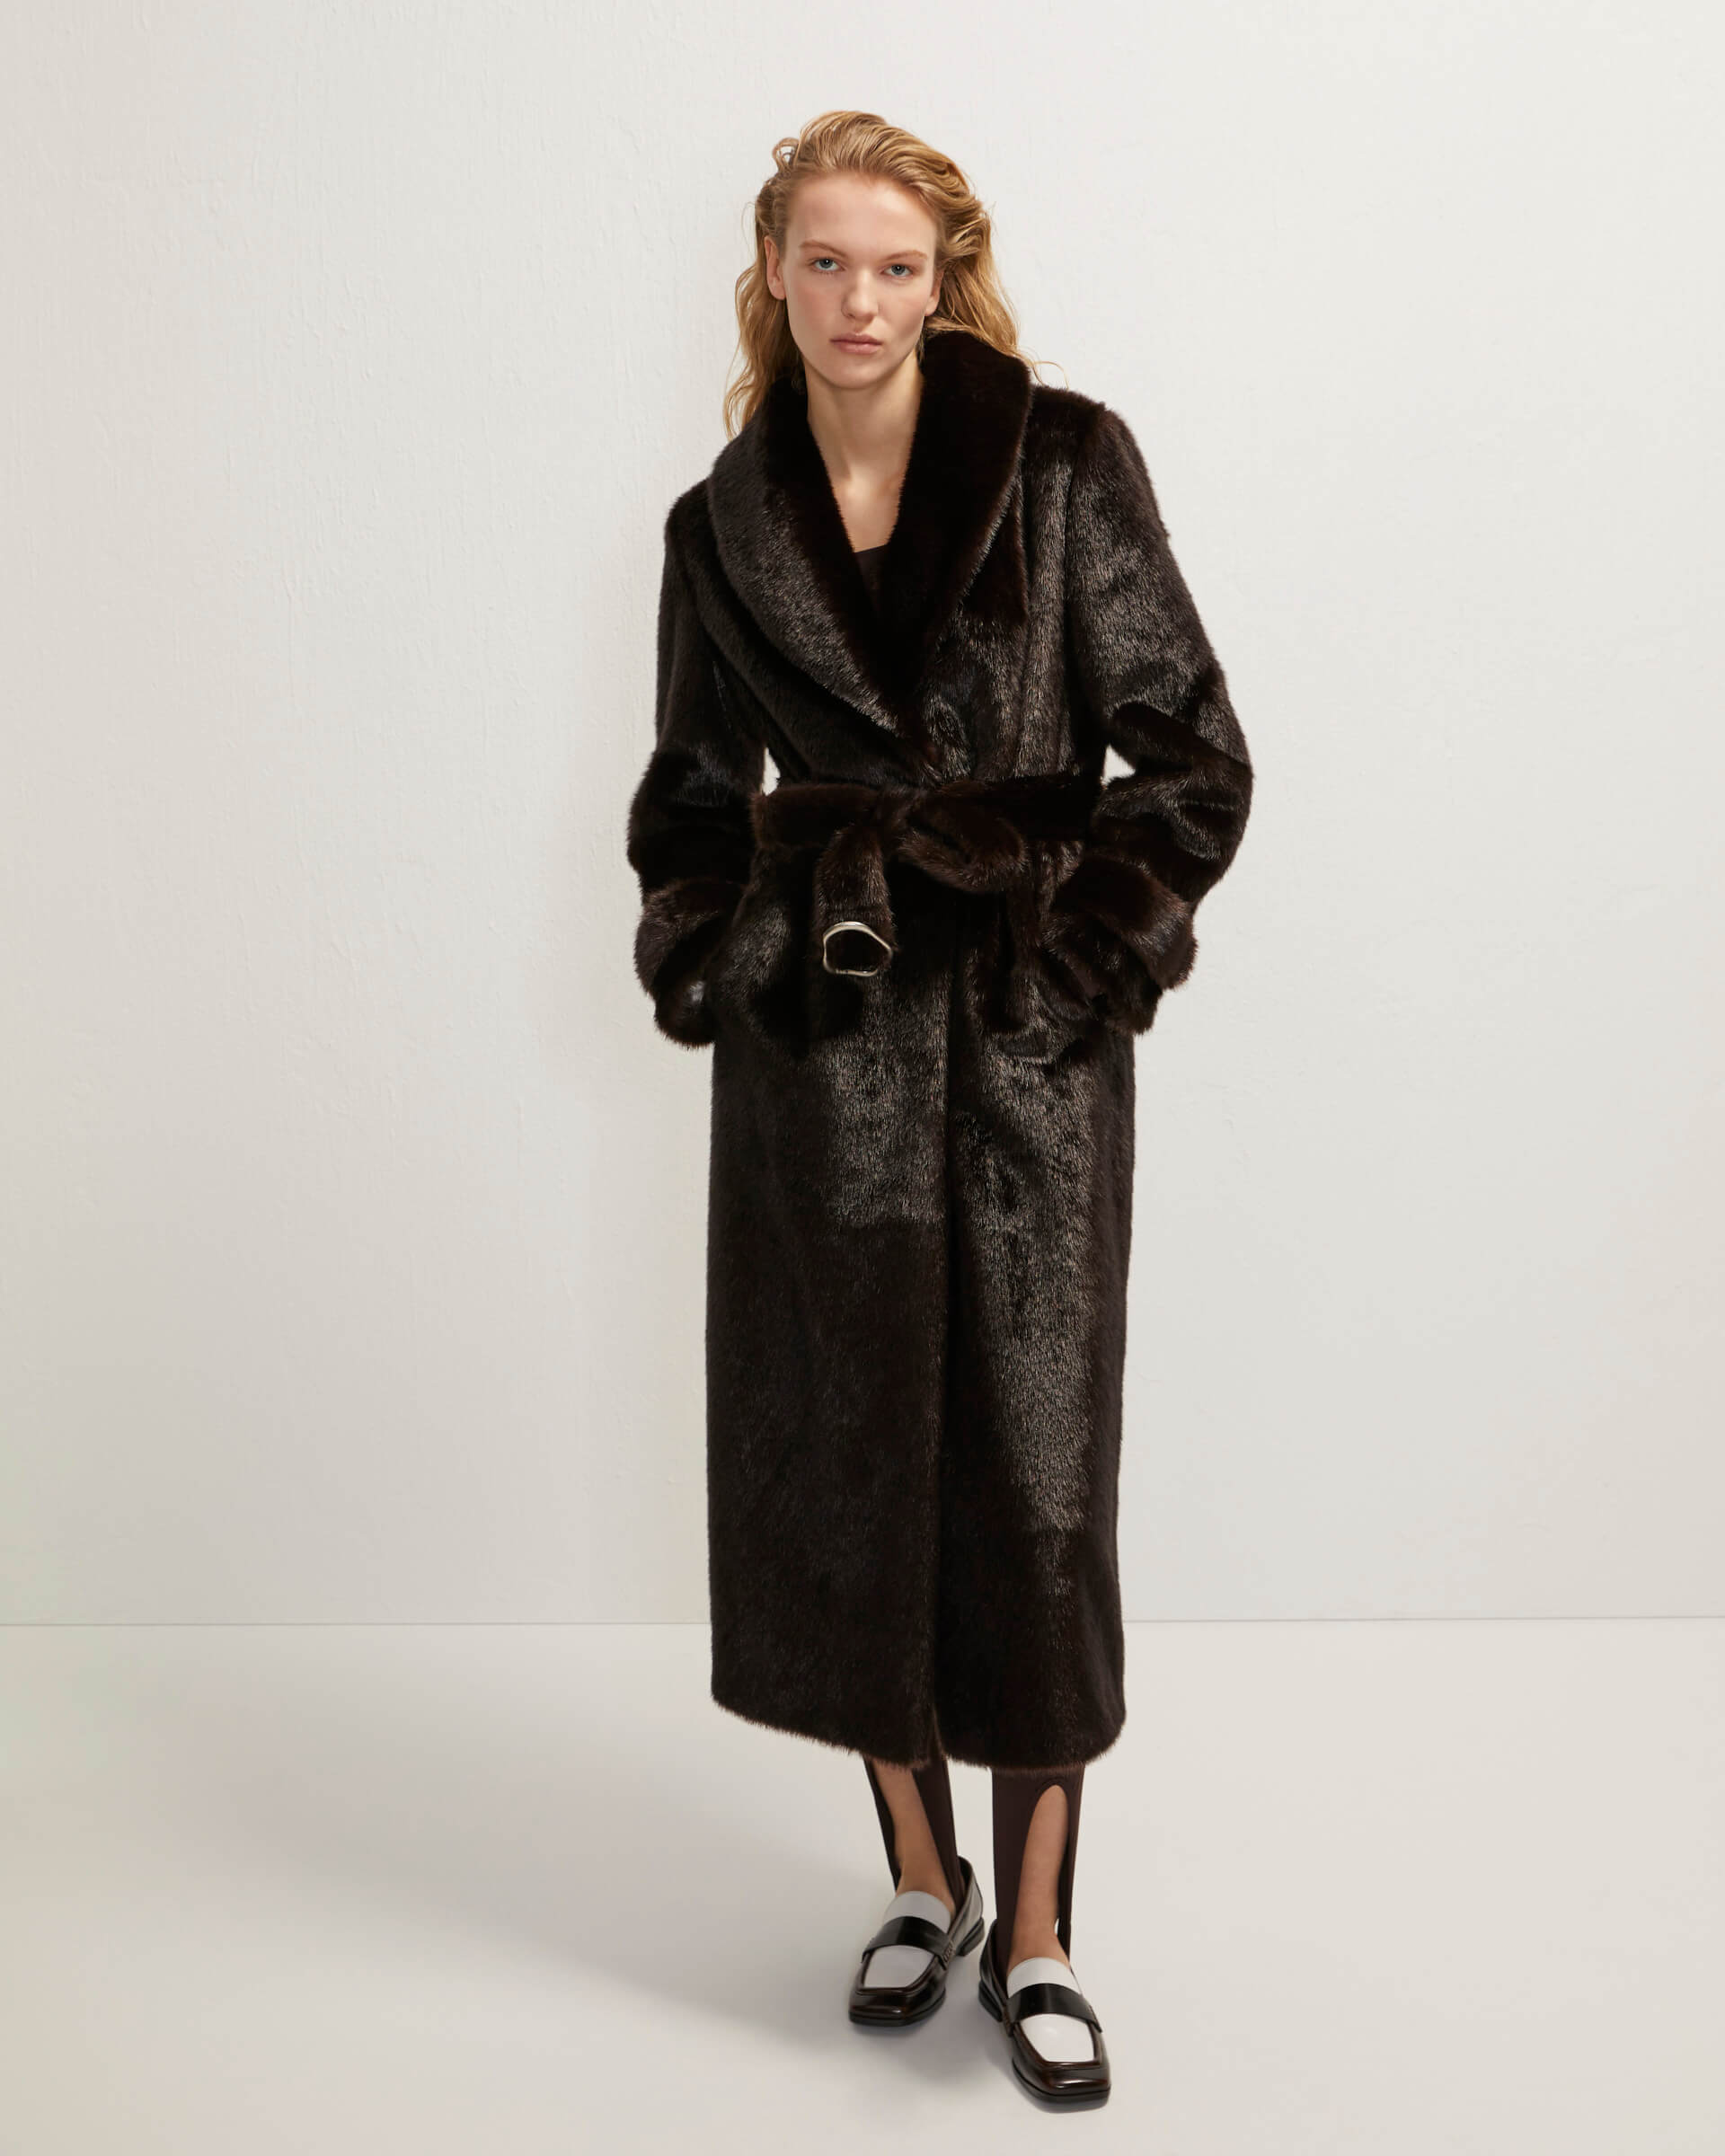 Beatrice .b Eco-Fur Nightgown Coat